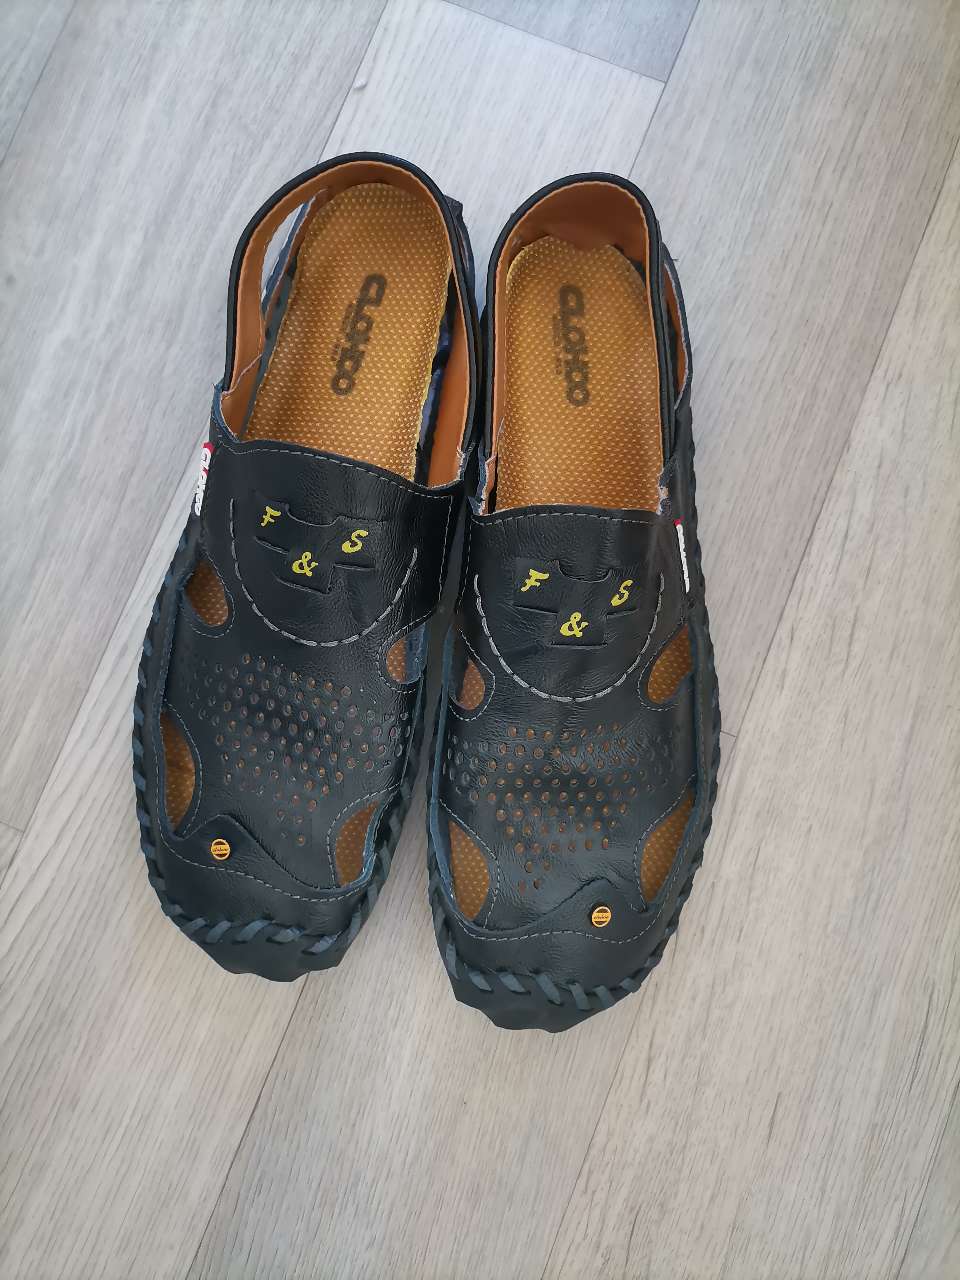 Clohoo Mens Sandals Durable Handmade Stitching Close Toe Non Slip Shoes ...